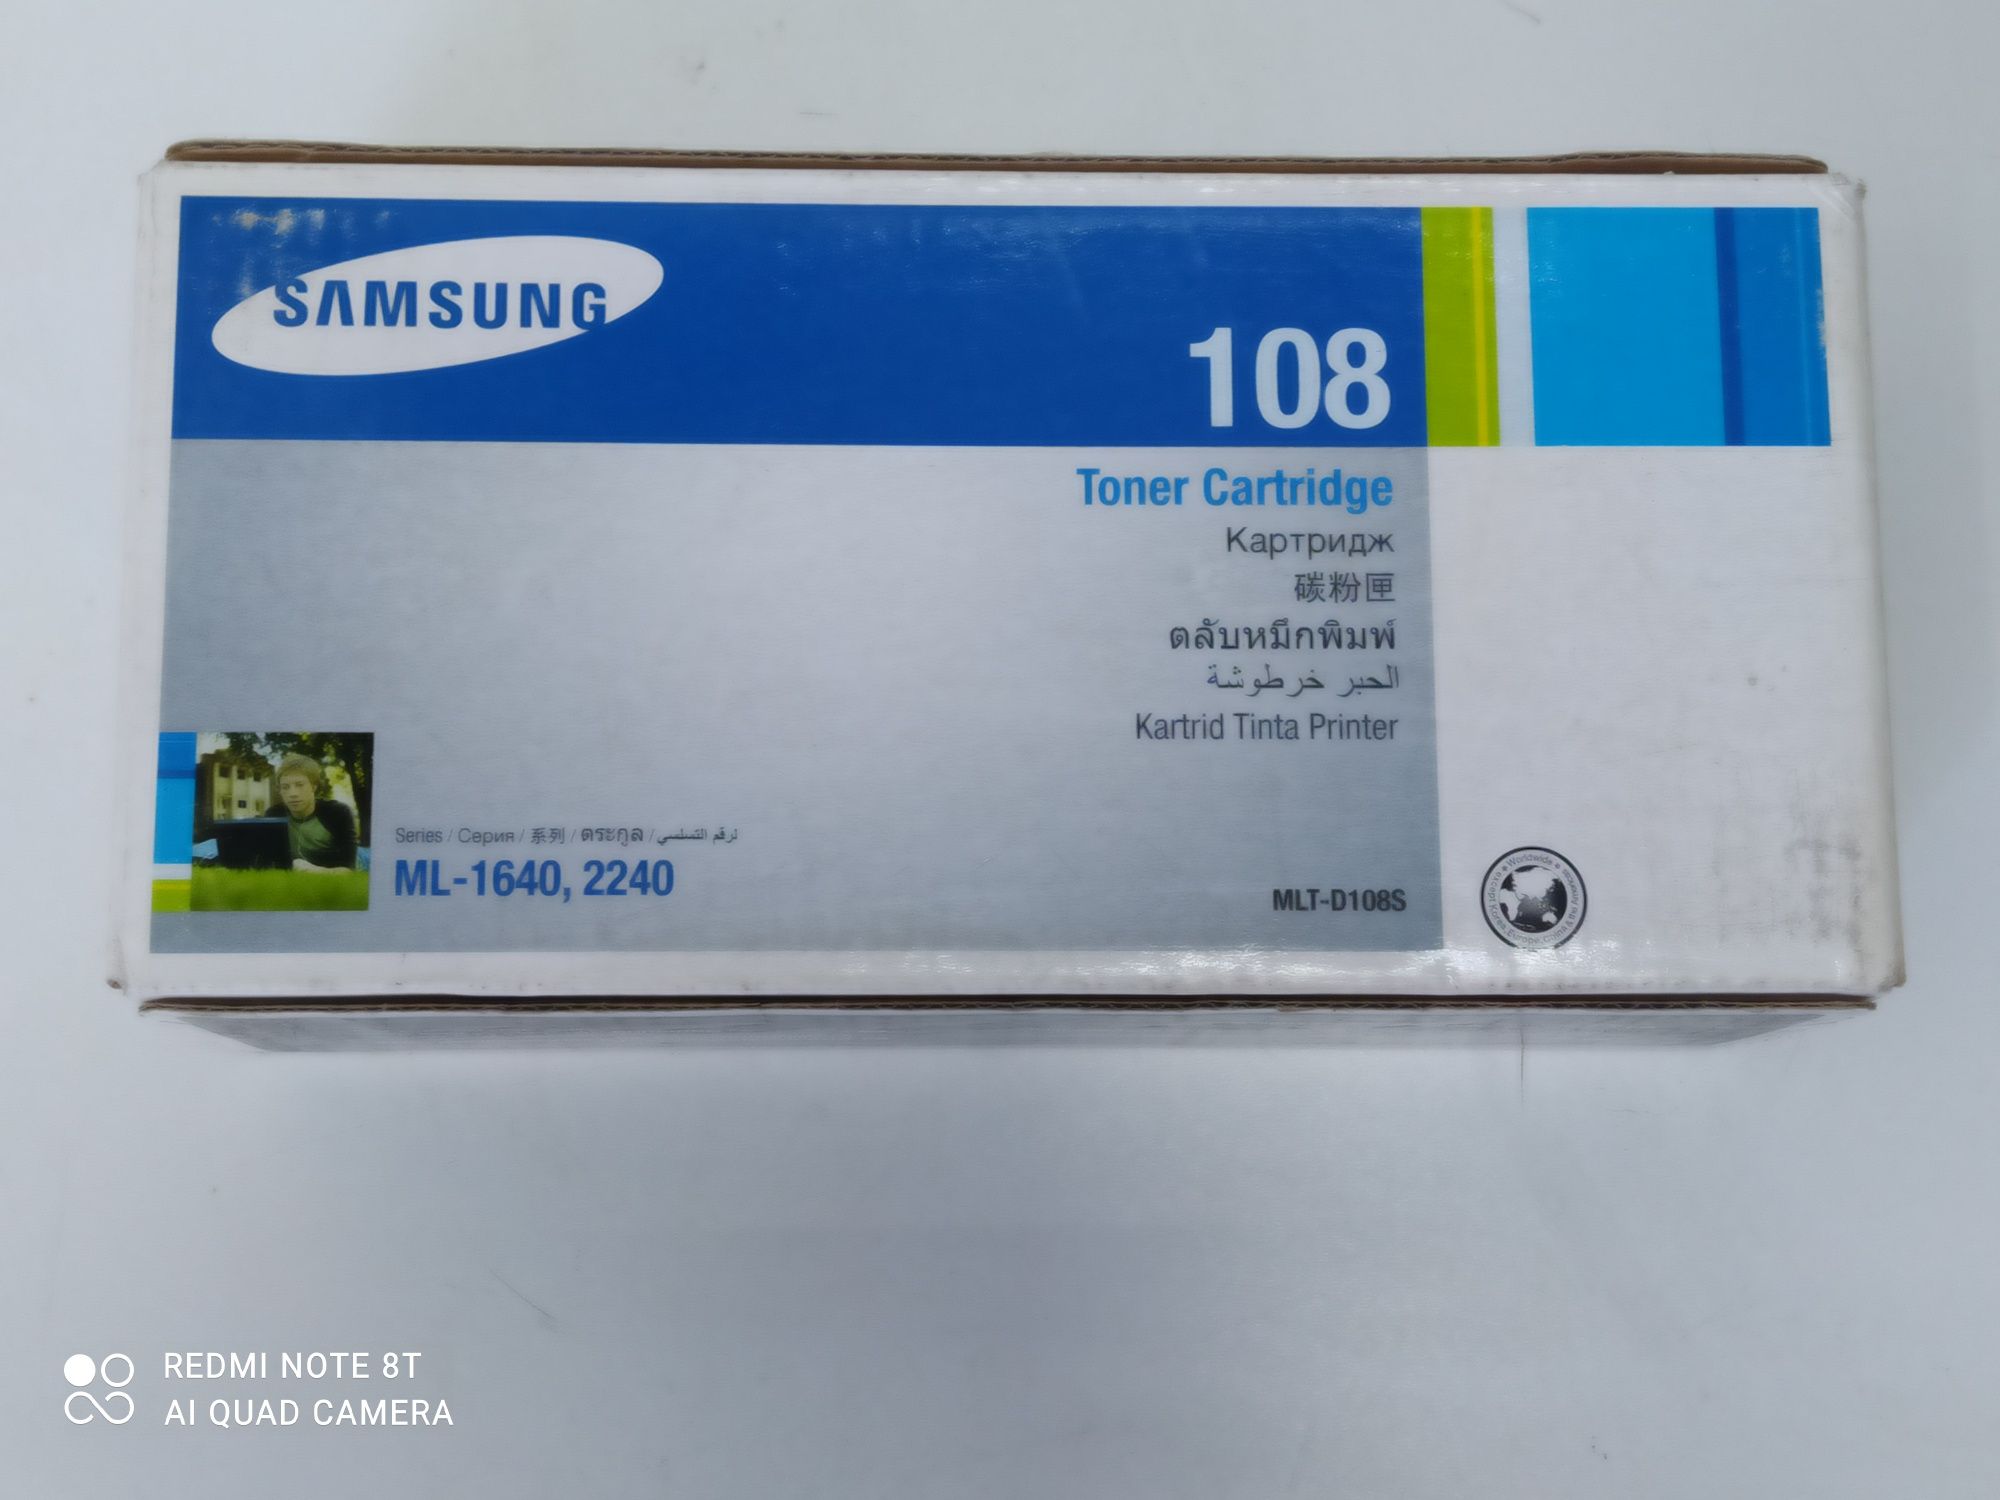 Картридж Samsung ML-1640, 2240